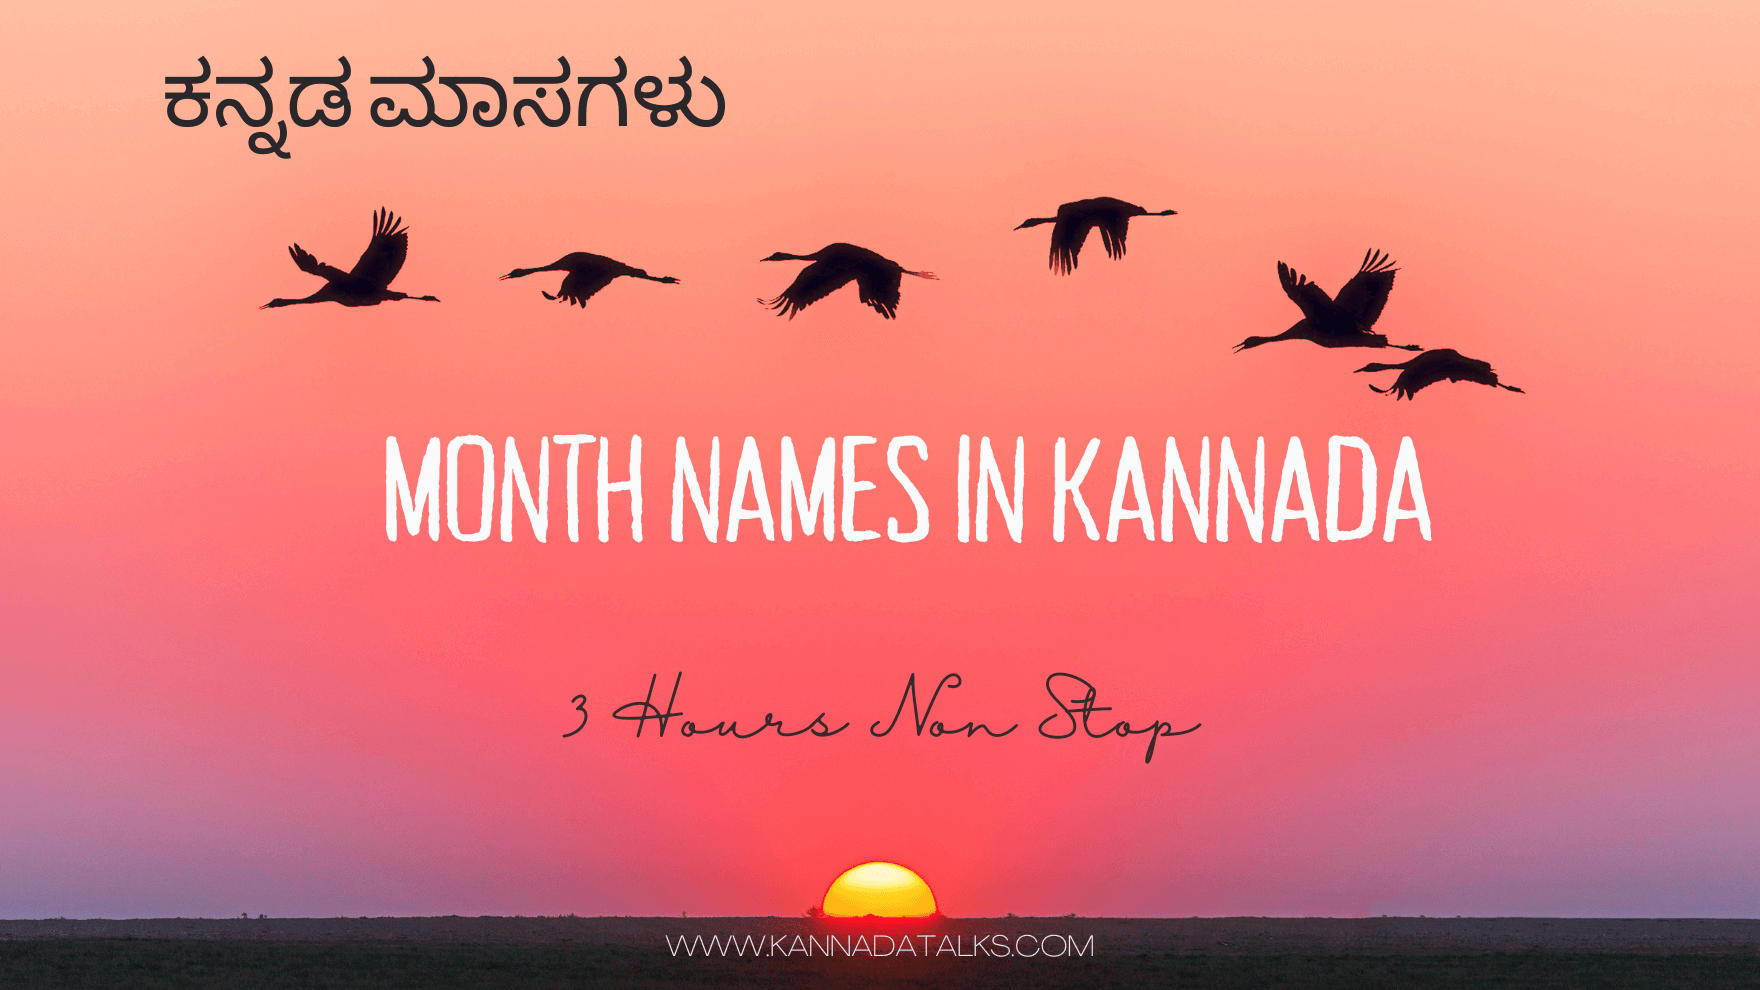 Months names in Kannada - ಕನ್ನಡ ಮಾಸಗಳು